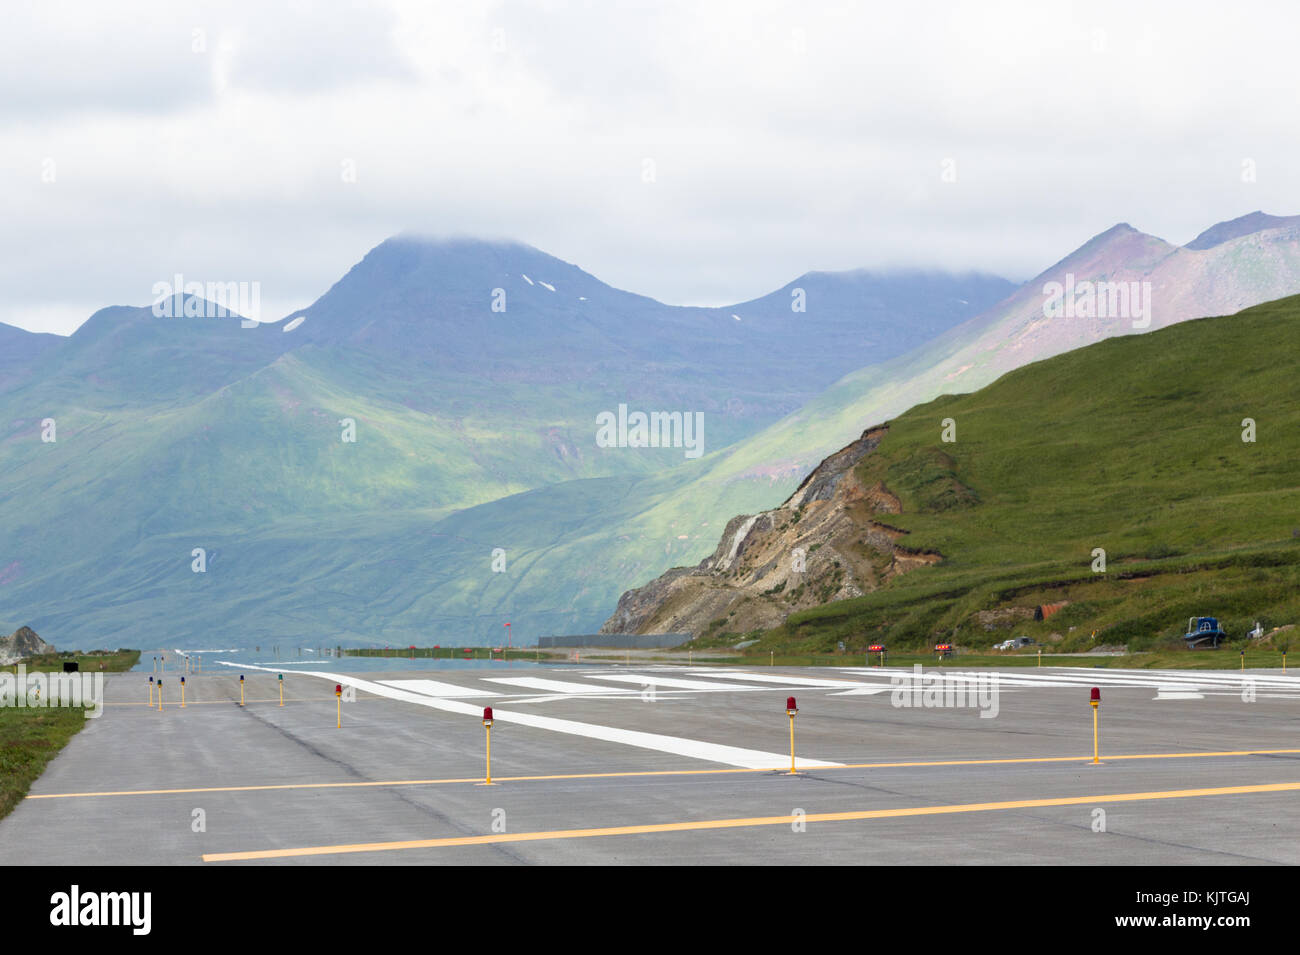 Dutch Harbor, Unalaska, Alaska, USA - August 14th, 2017: View of the runway of the Tom Masden Airport, Dutch Harbor, Unalaska, Alaska. Stock Photo